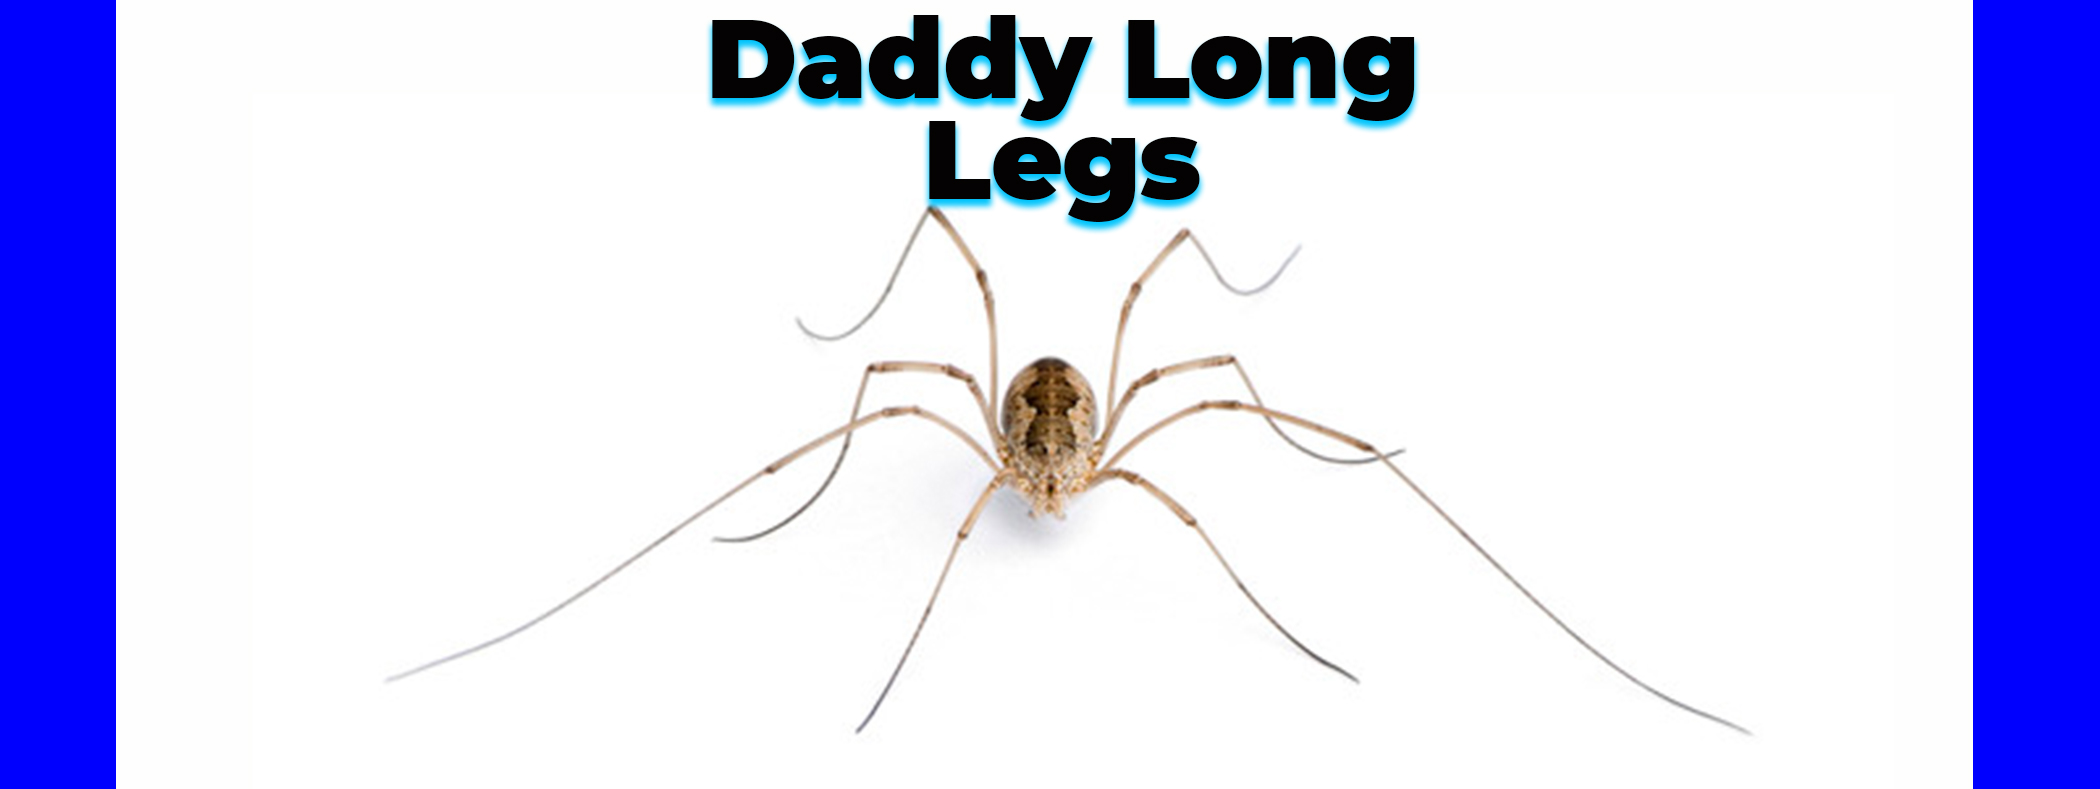 10 MIN STRETCH FOR SLIM & LONG LEGS (21 Day SLIM LEG Series) 